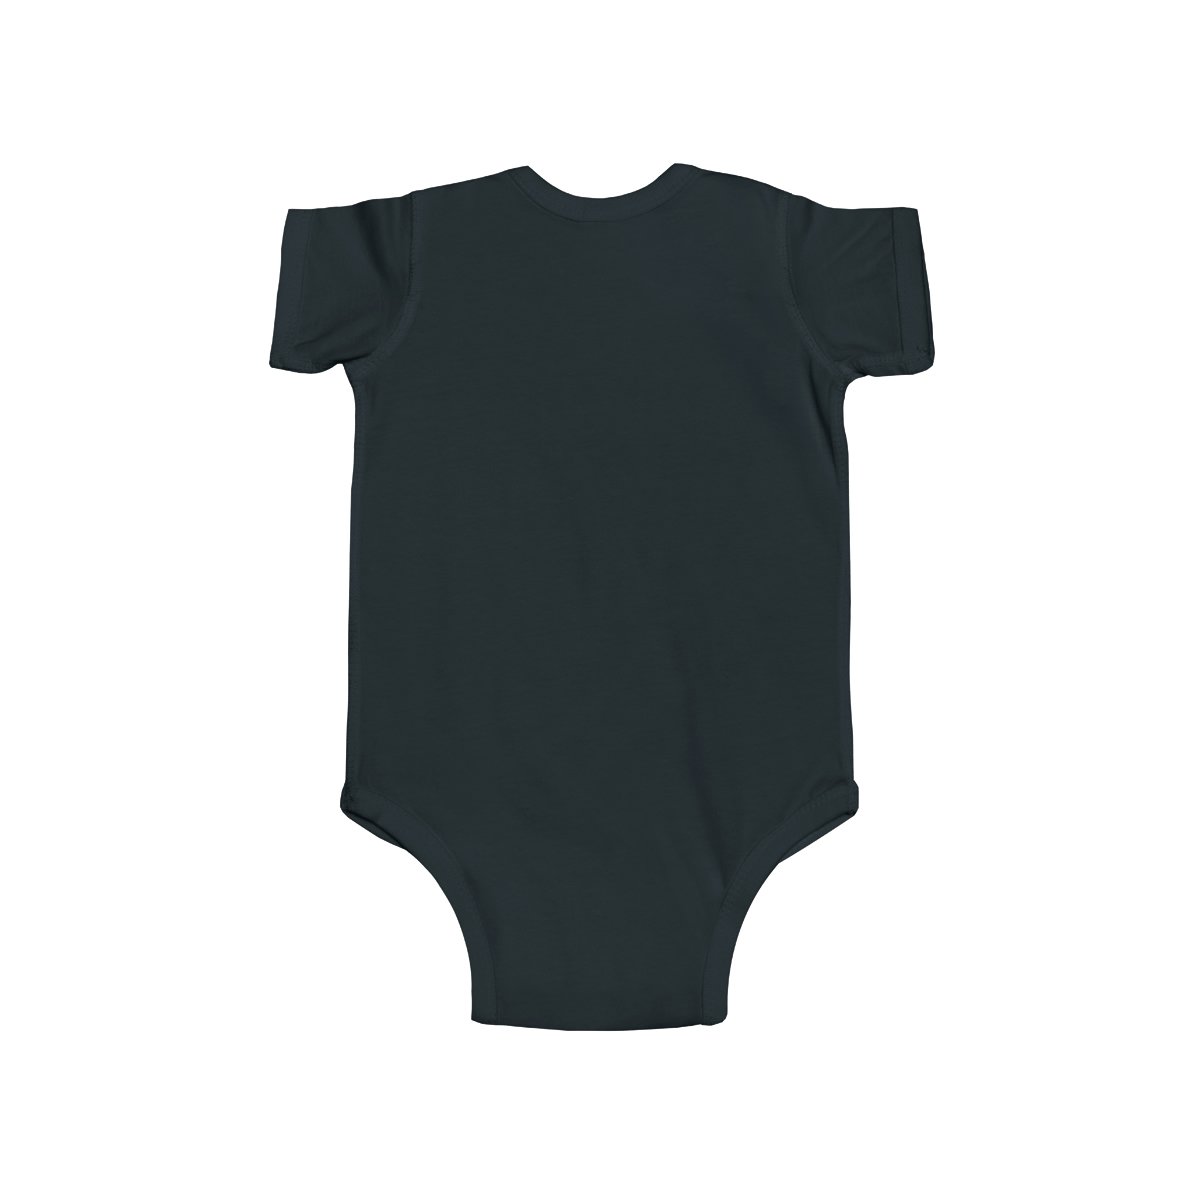 Sanctuary International – Revolution 2021 Infant Fine Jersey Bodysuit